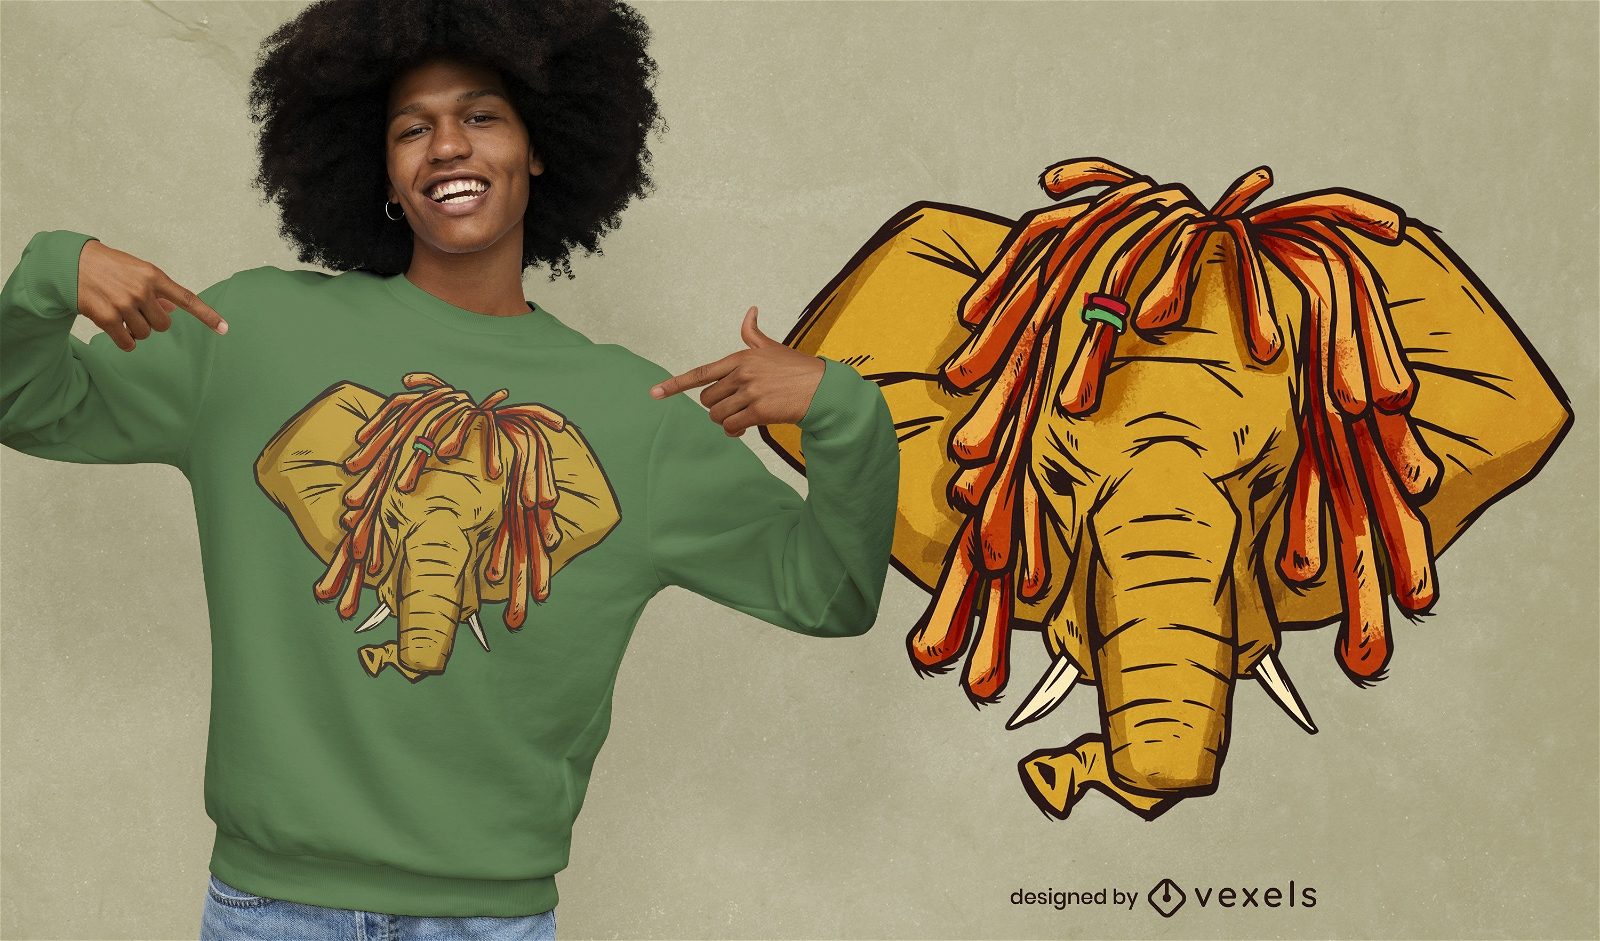 Elephant animal with dreadlocks t-shirt design